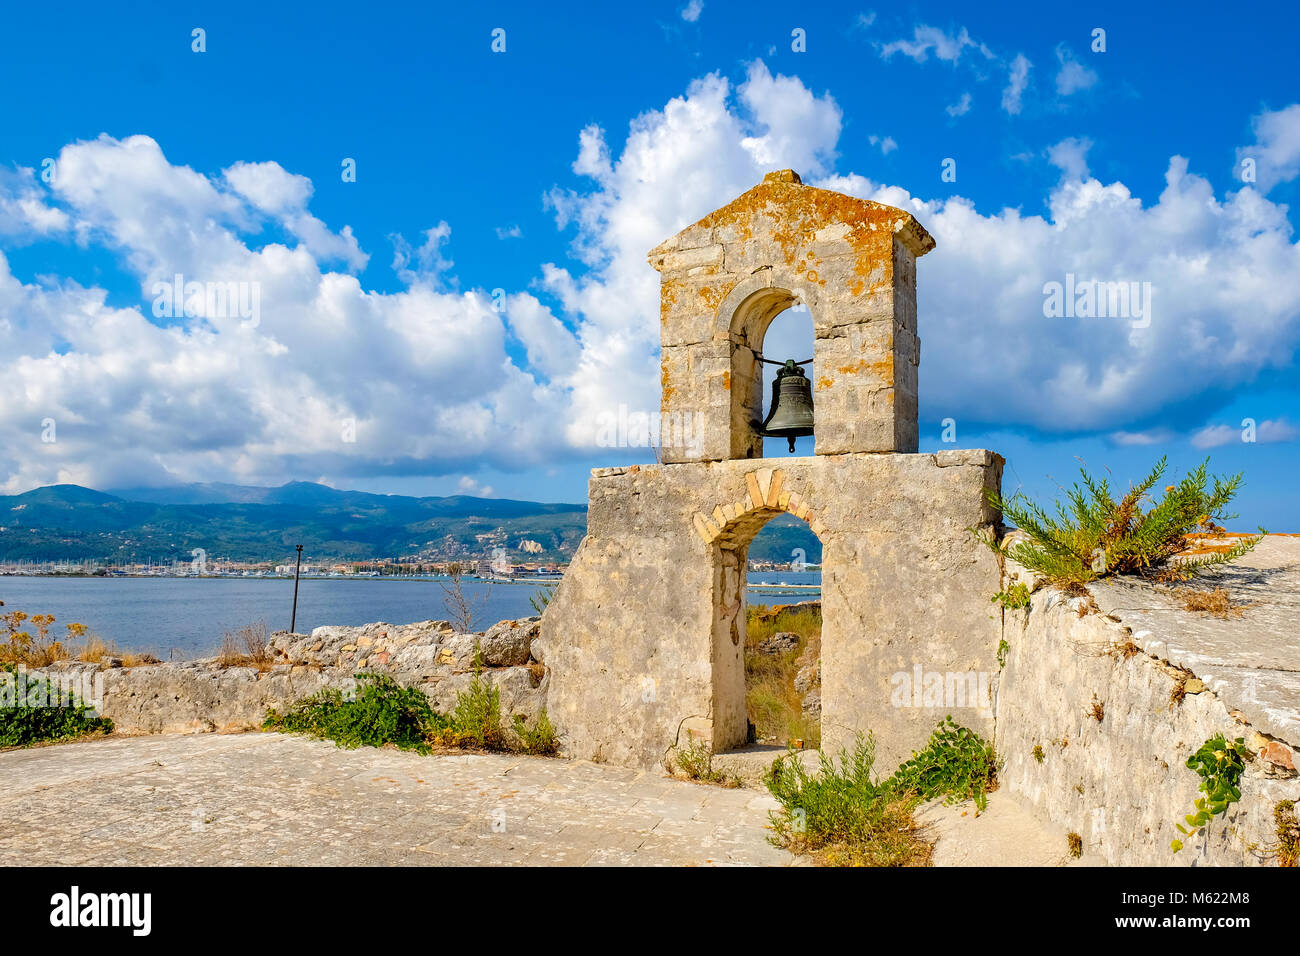 Lefkada Town as seen from the Lefkada Fortress Santa Maura - Agia Mavra tourist attraction near the island capital city Stock Photo